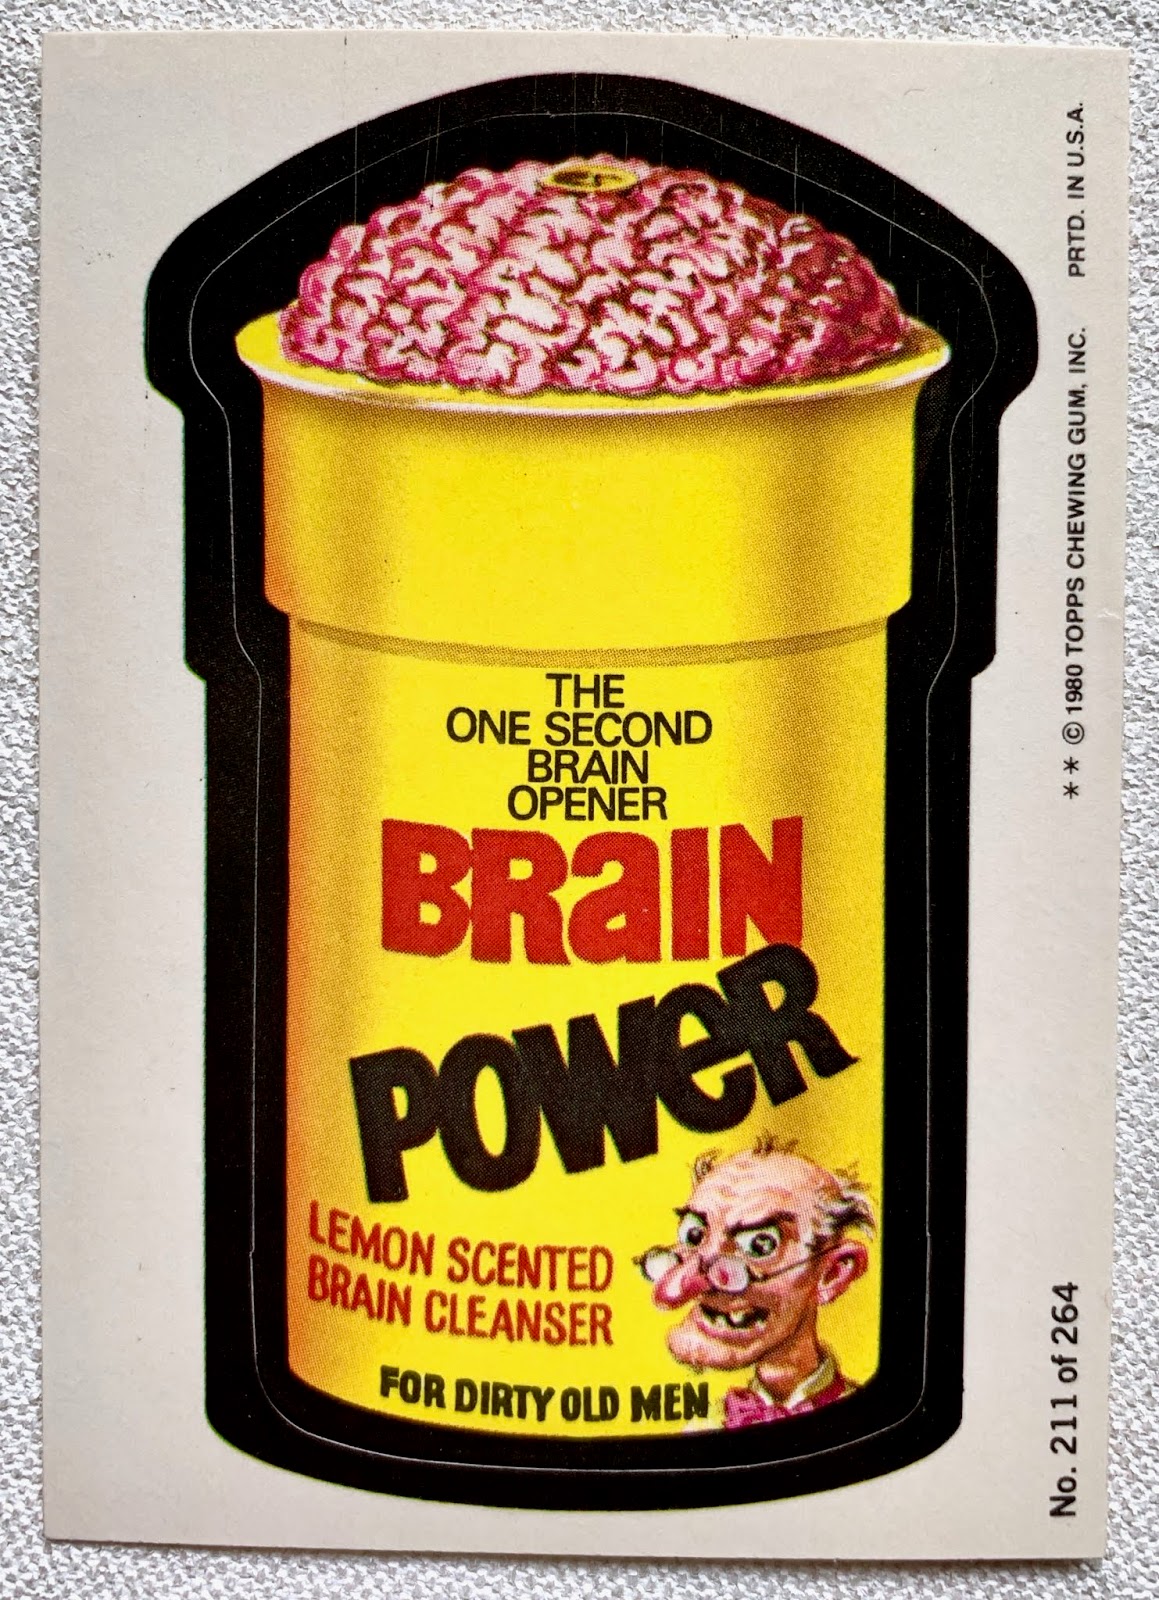 Wacky Pin. Brain Power Drops конфеты. Wacky packages Mrs clean. "Wacky Pin tin".